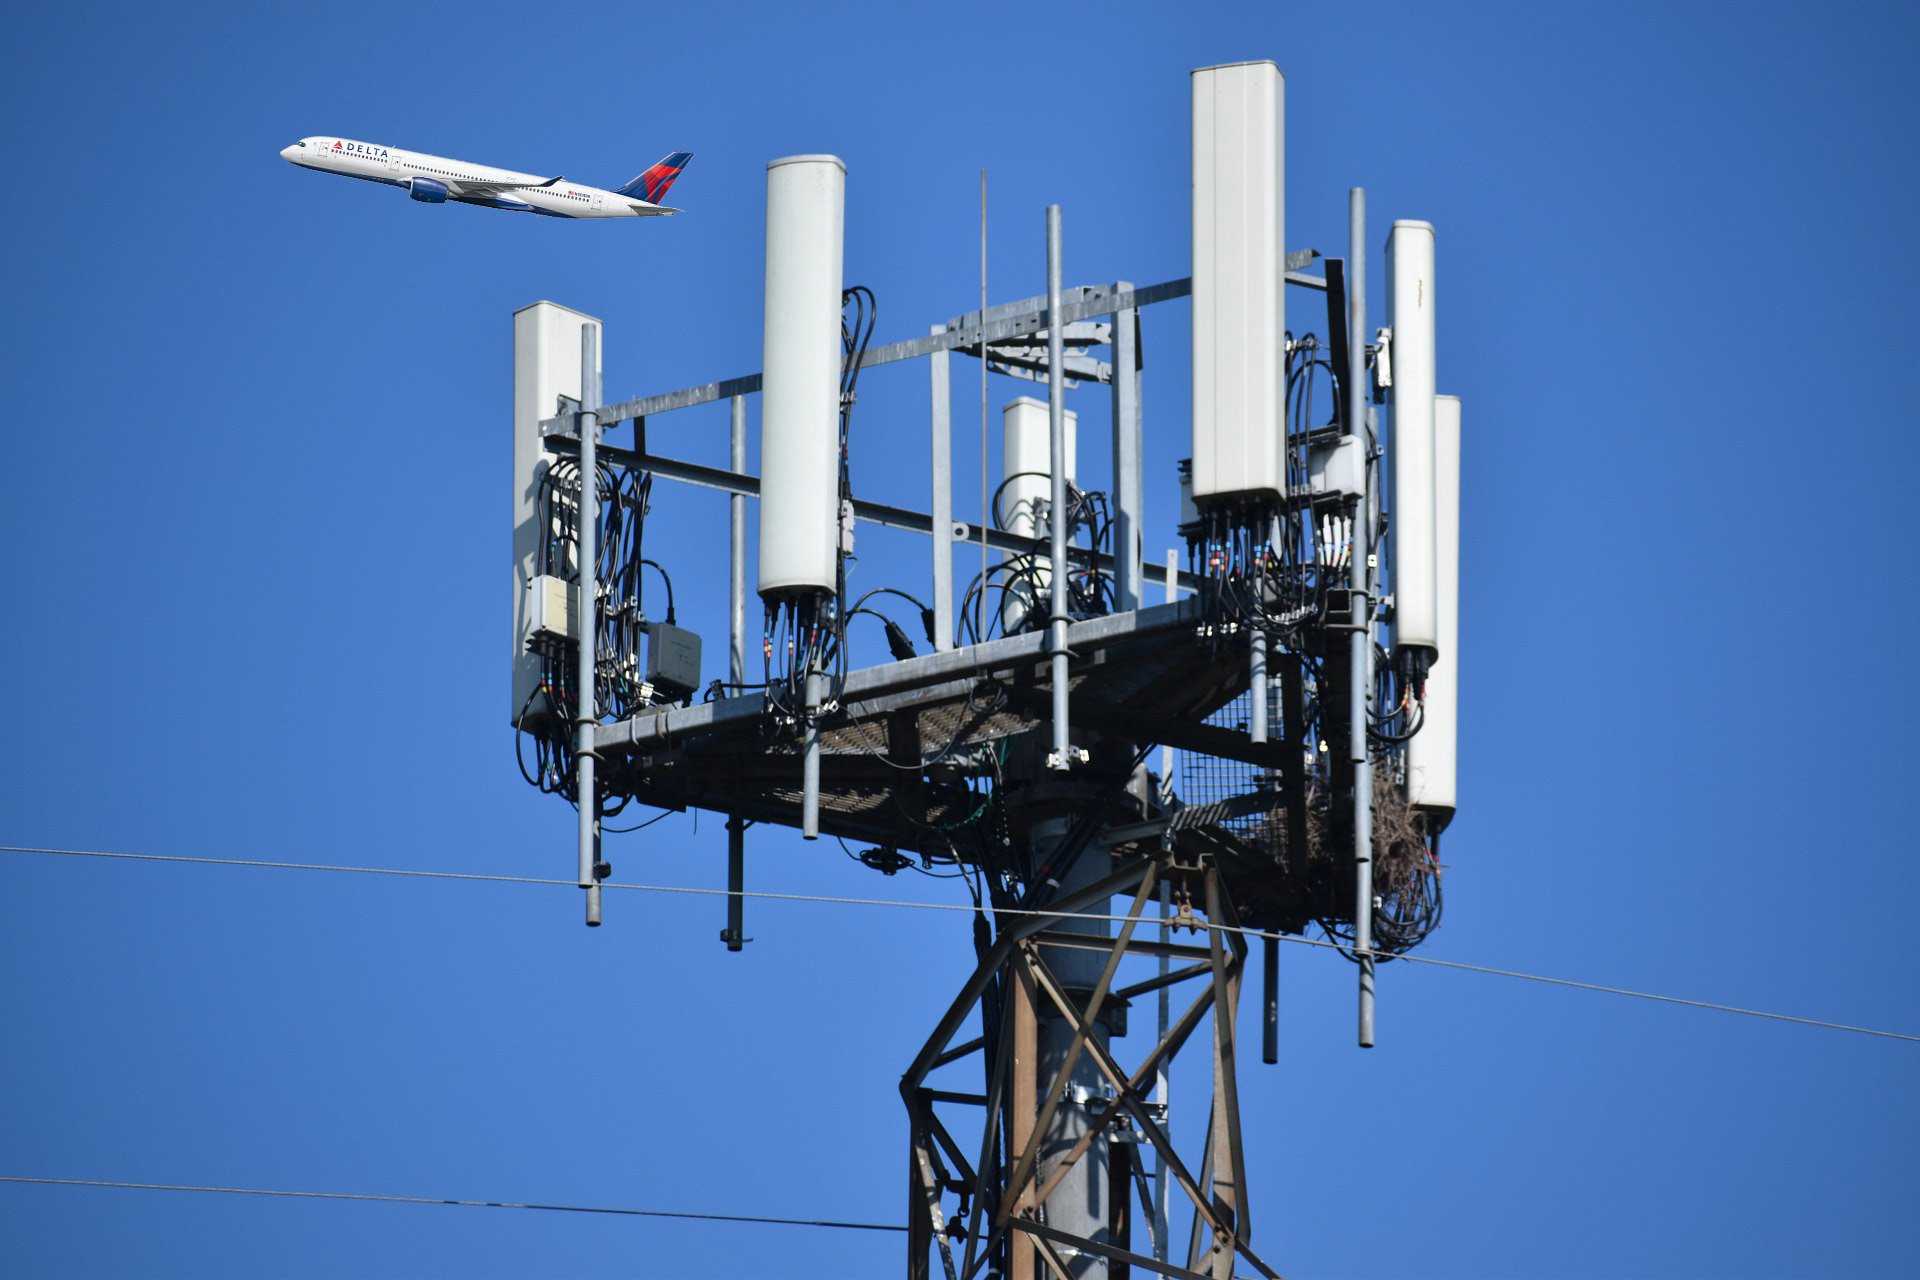 US DOT এবং FAA AT&T এবং Verizon কে নতুন 5G পরিষেবা চালু করতে বিলম্ব করতে বলেছে৷